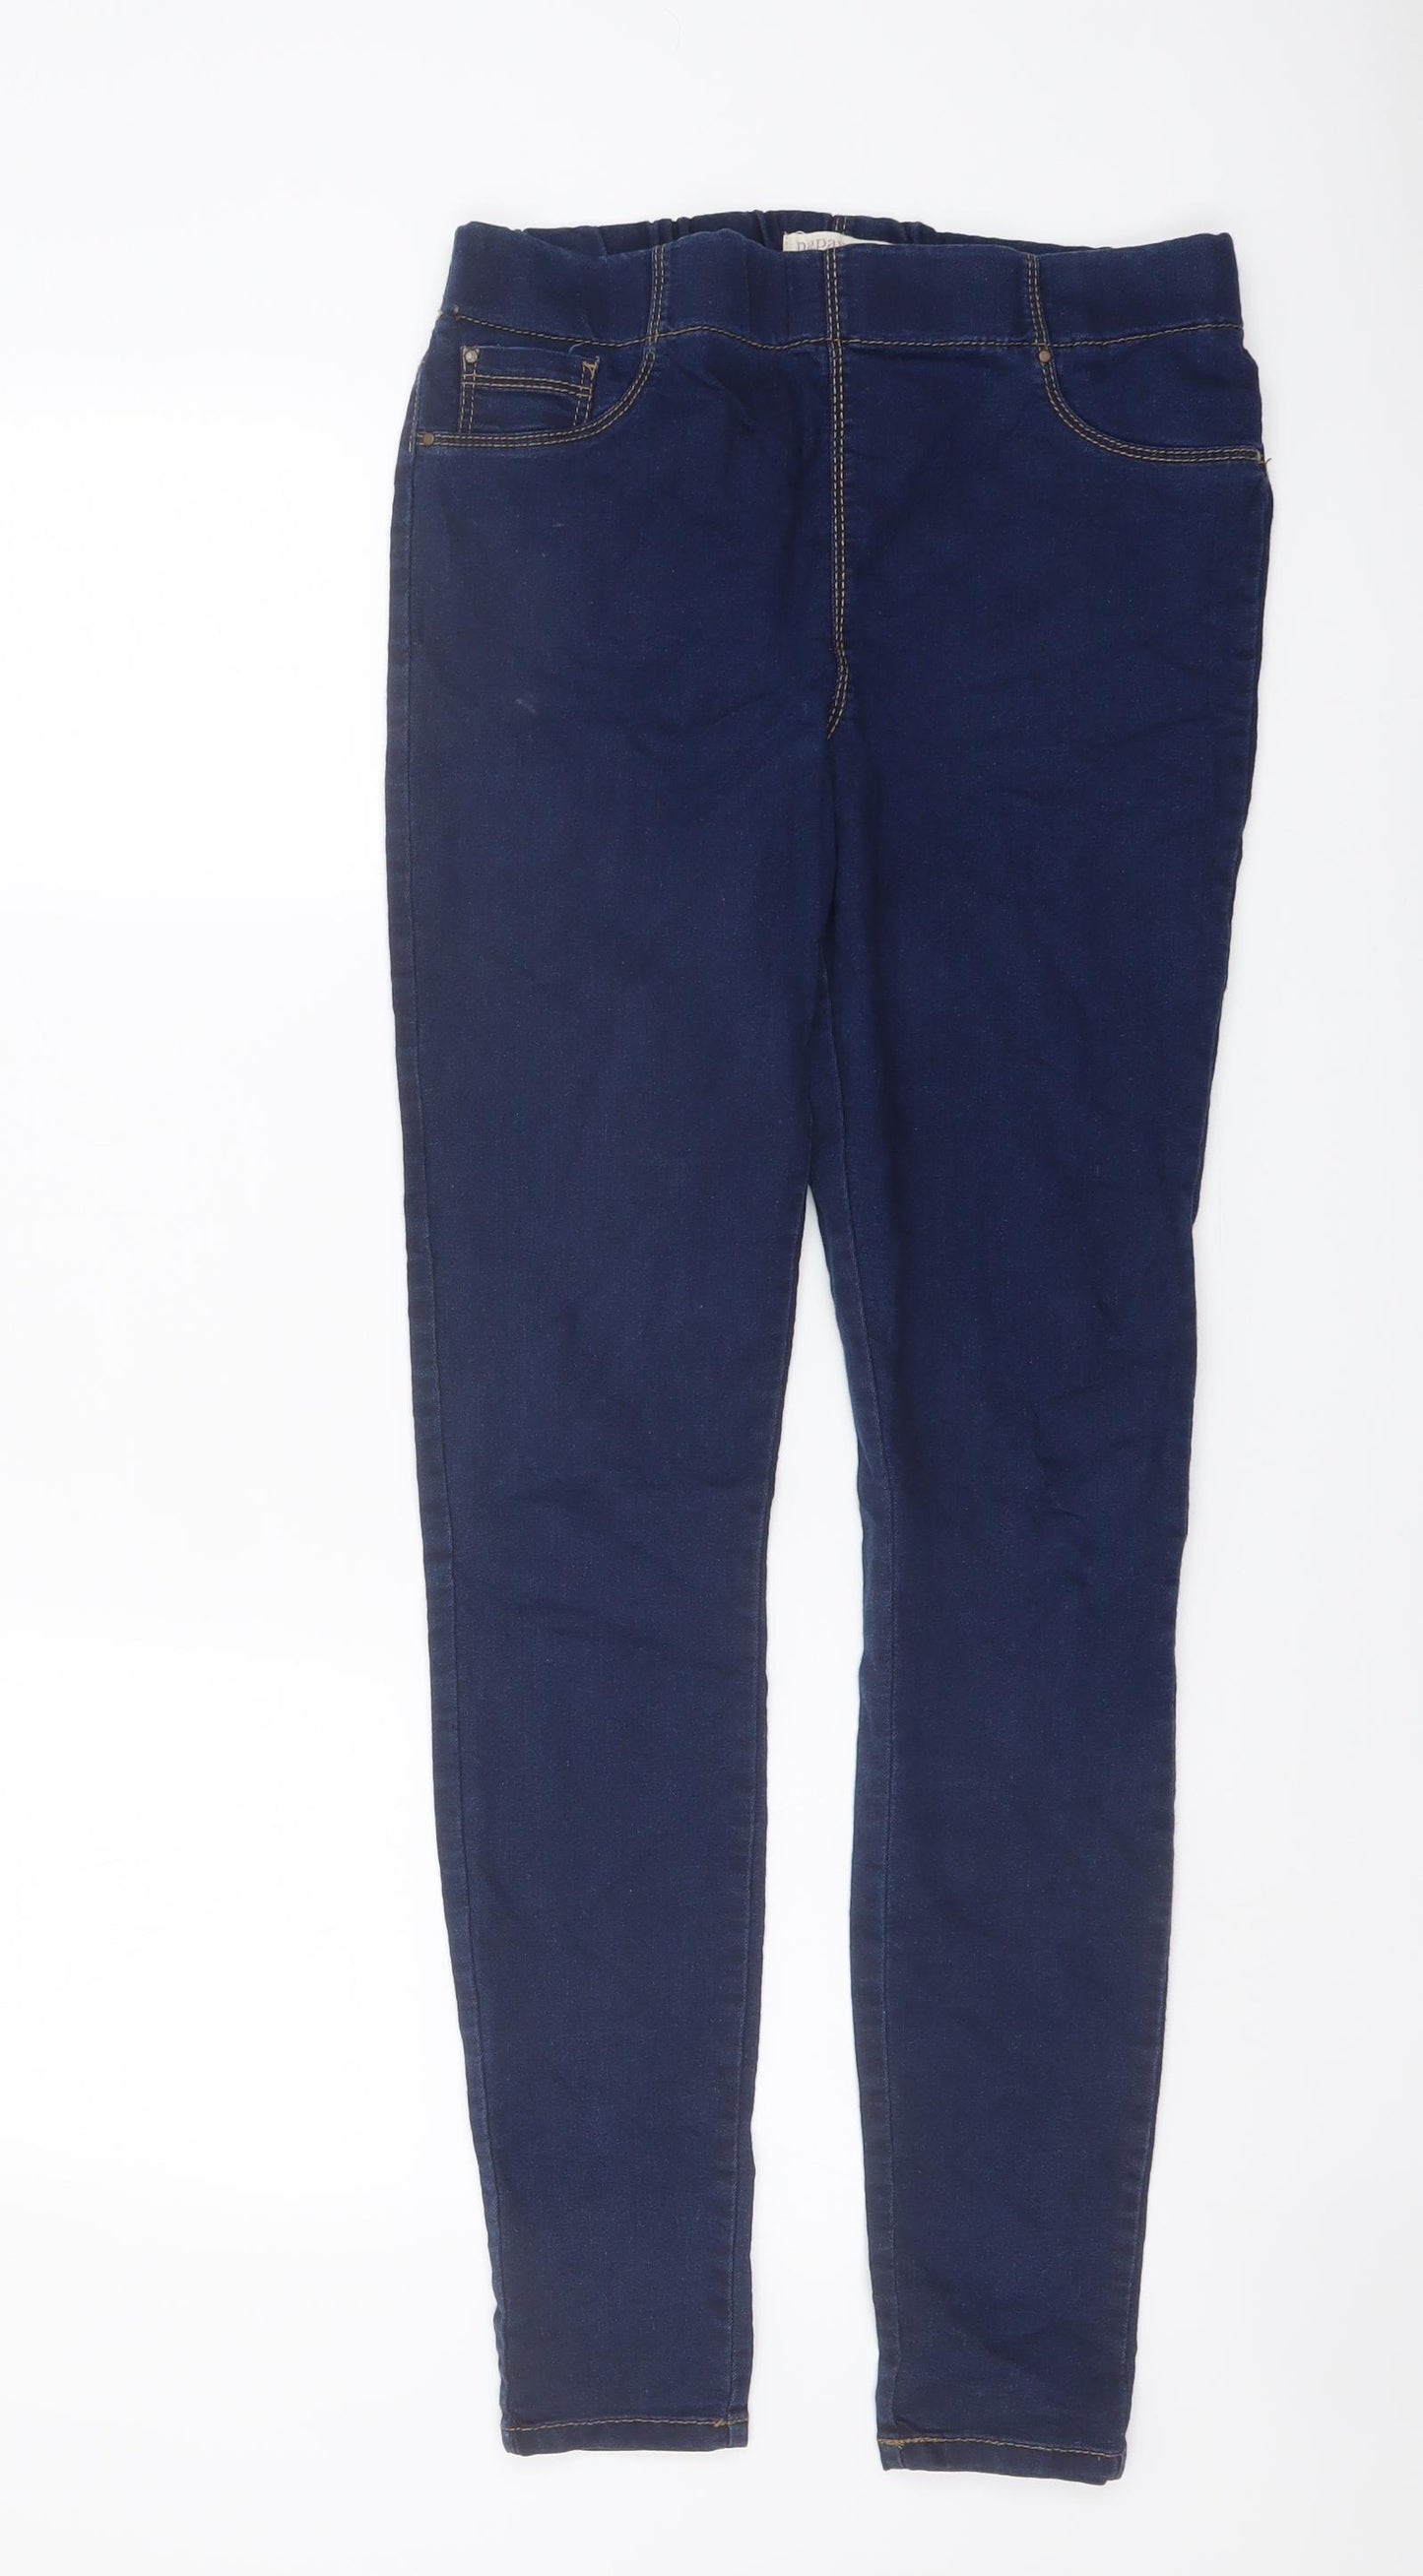 Papaya Womens Blue Cotton Jegging Jeans Size 12 L29 in Regular